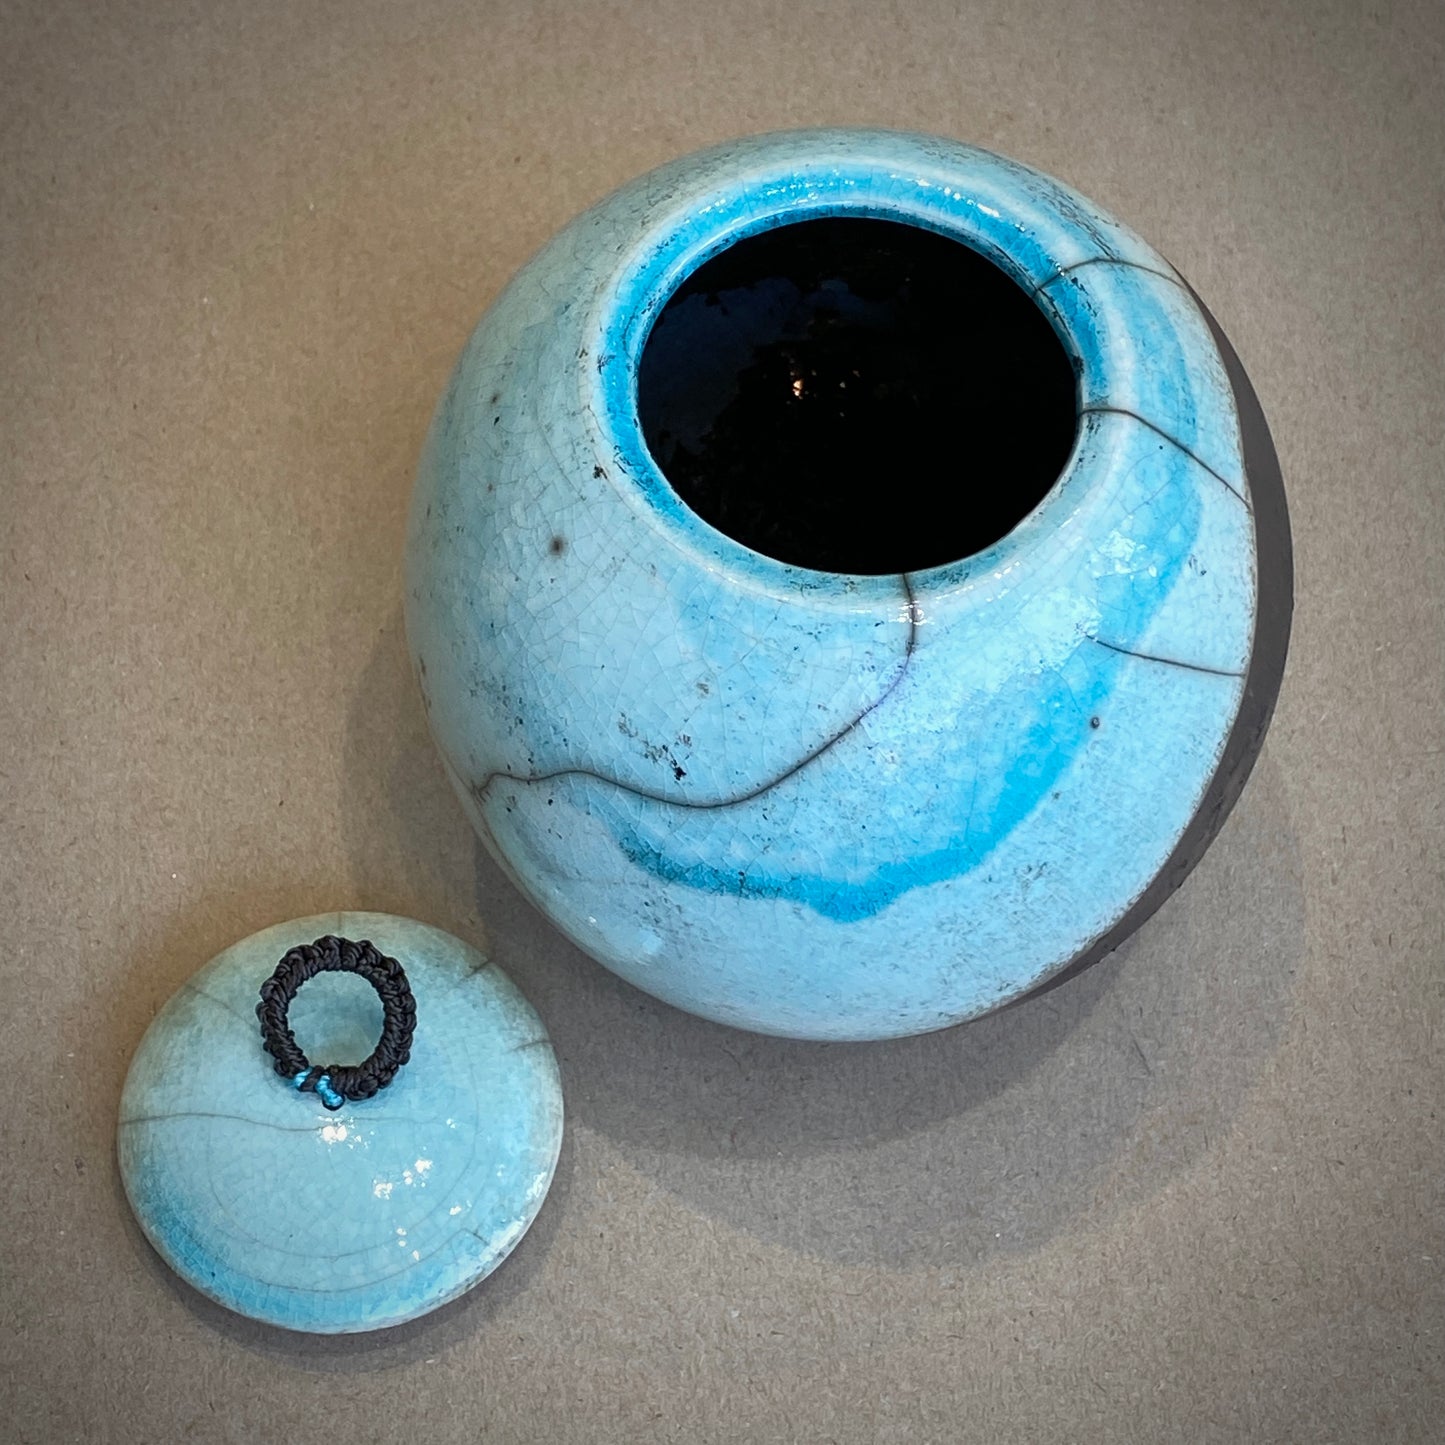 Load image into Gallery viewer, Medium Raku Fired Porcelain Jar (blue)
